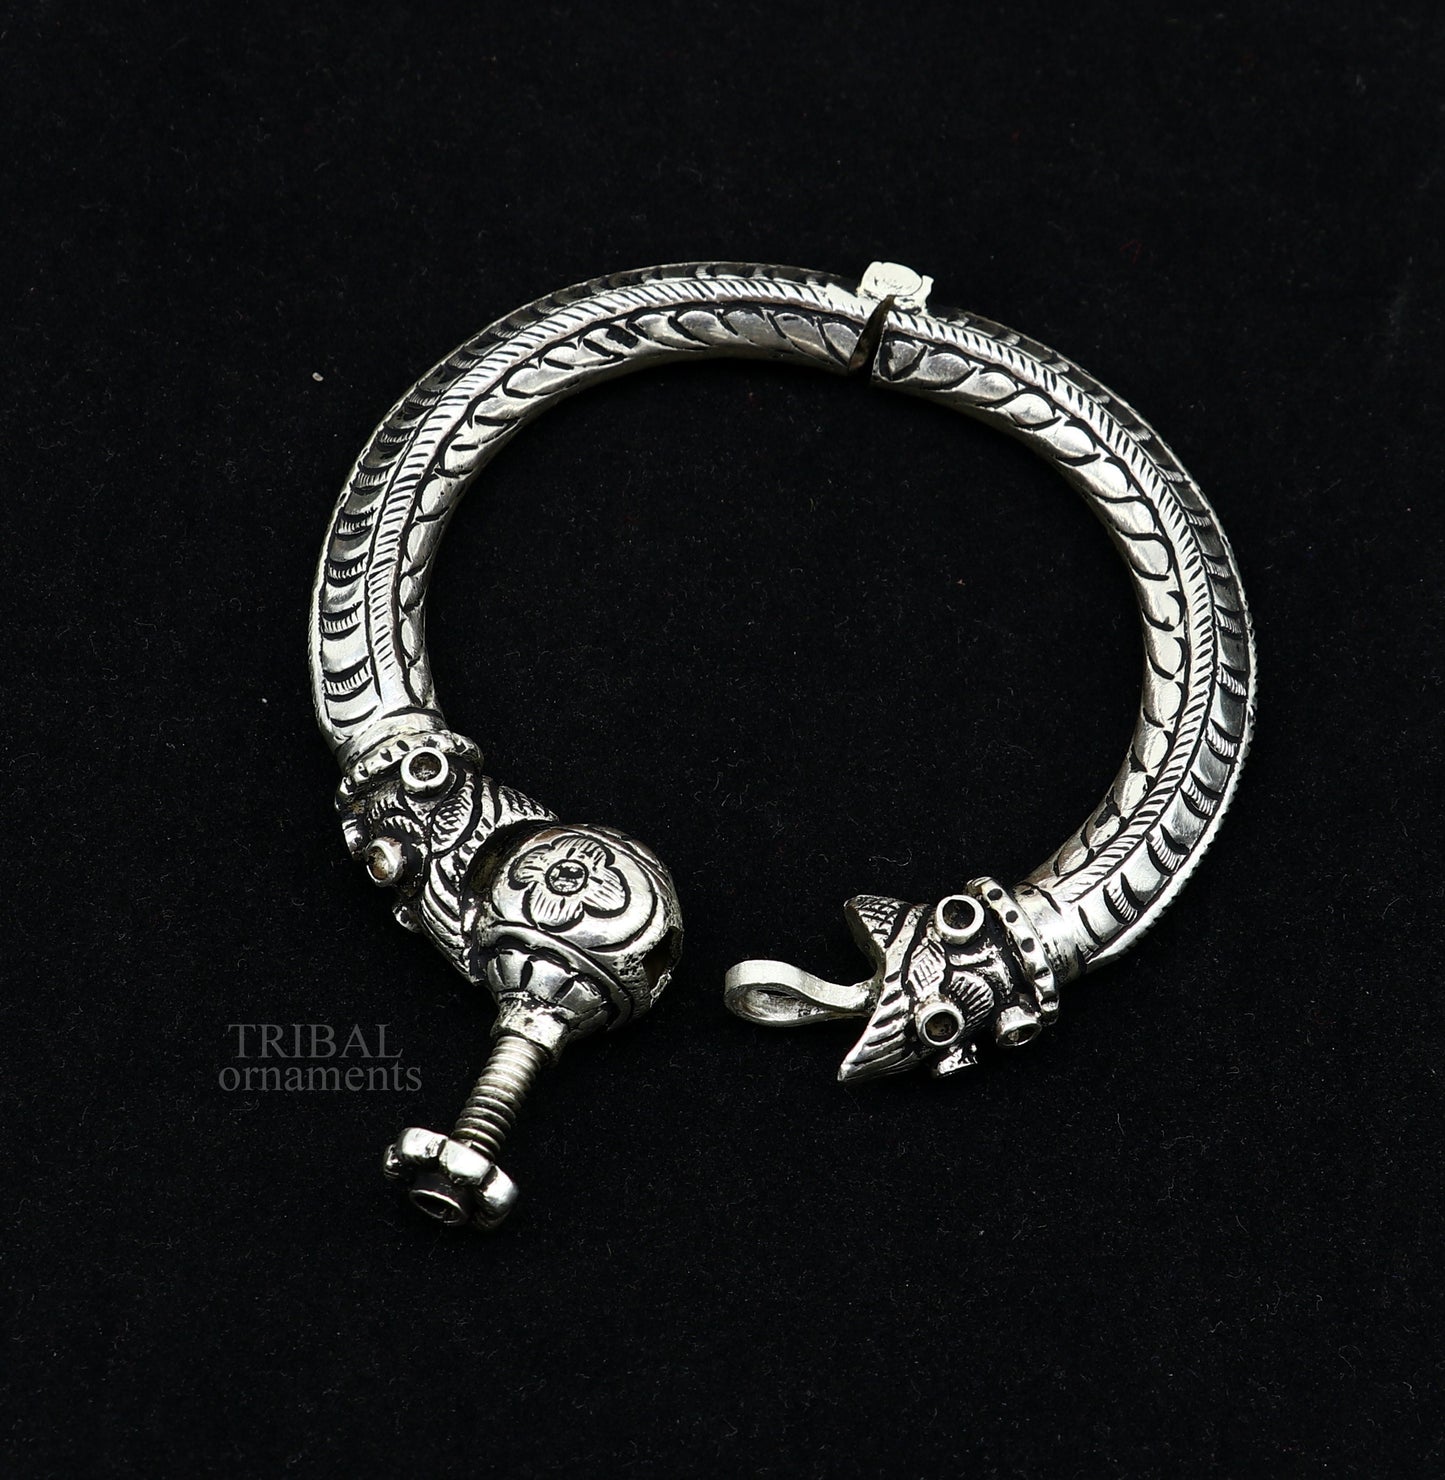 Vintage design handcrafted unique work 925 sterling silver bangle bracelet kada unique screw locking system best gifting jewelry nsk464 - TRIBAL ORNAMENTS